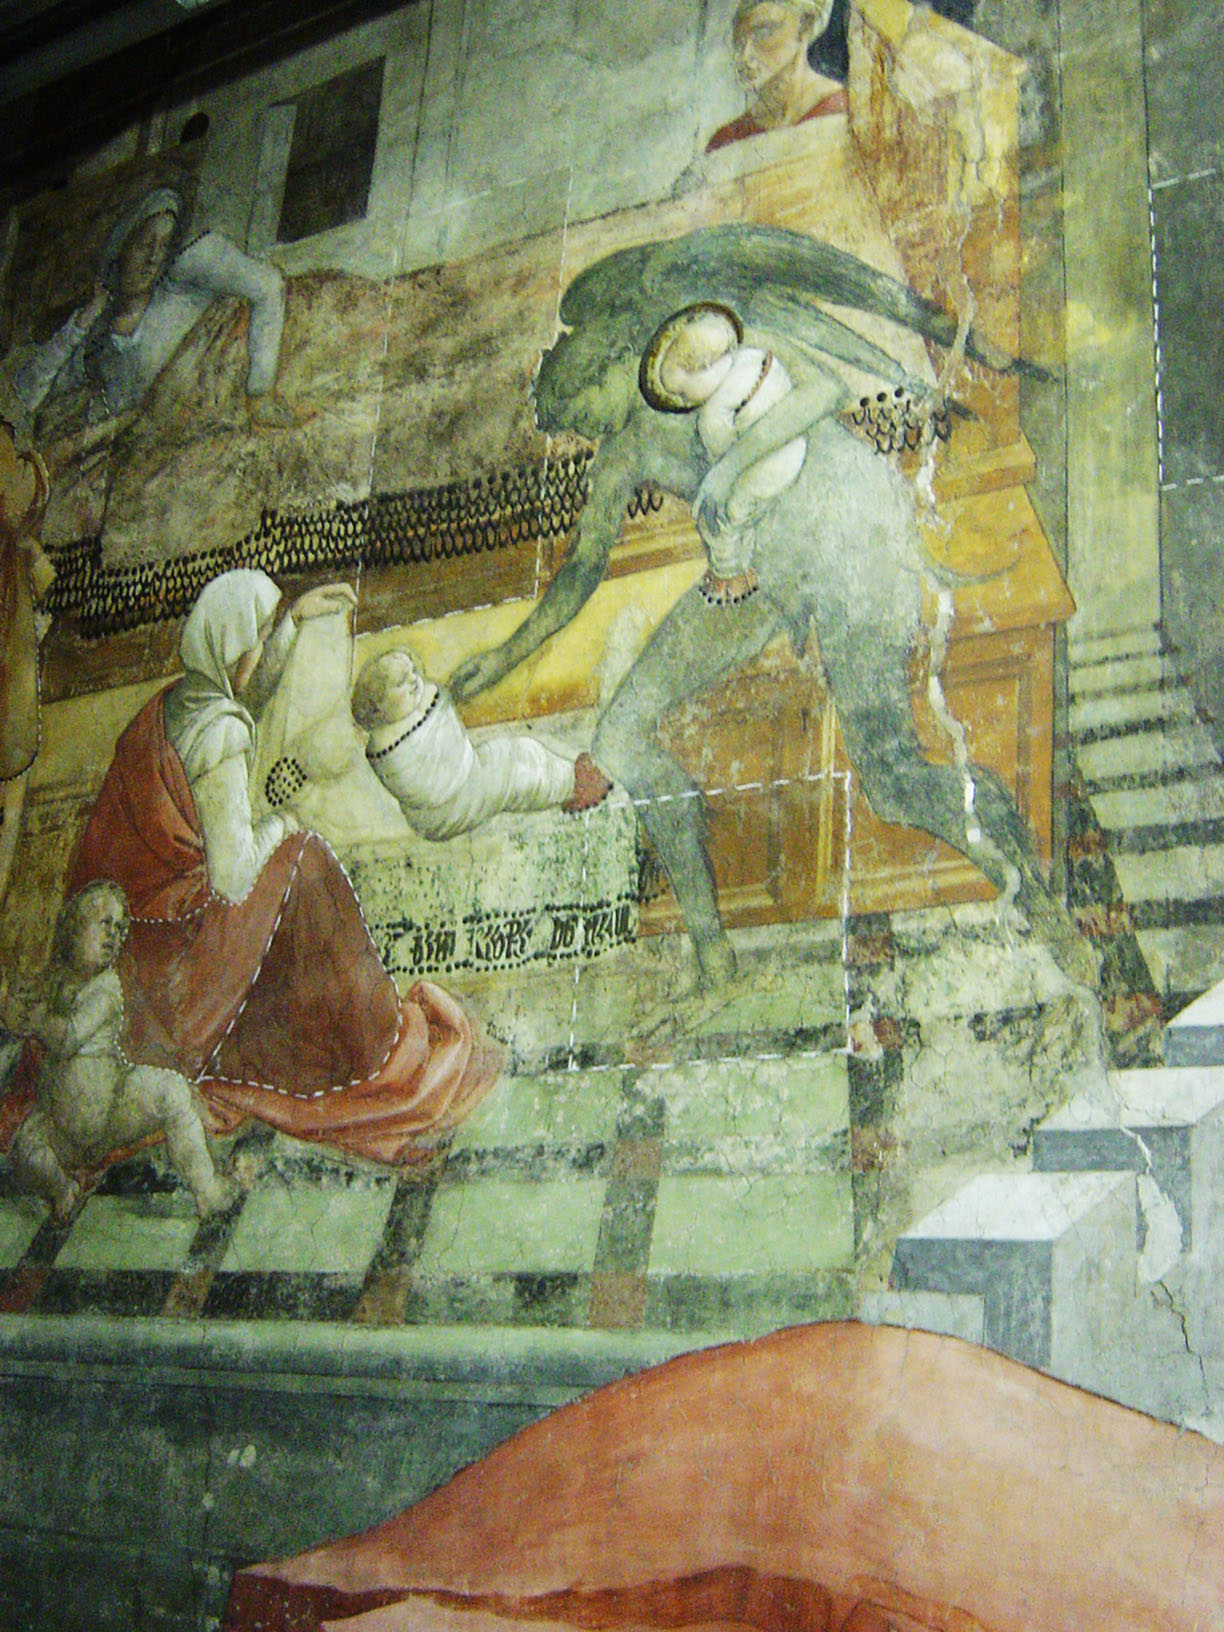 Prato, Duomo - Visit to restoratio of frescos of Filippo Lippi